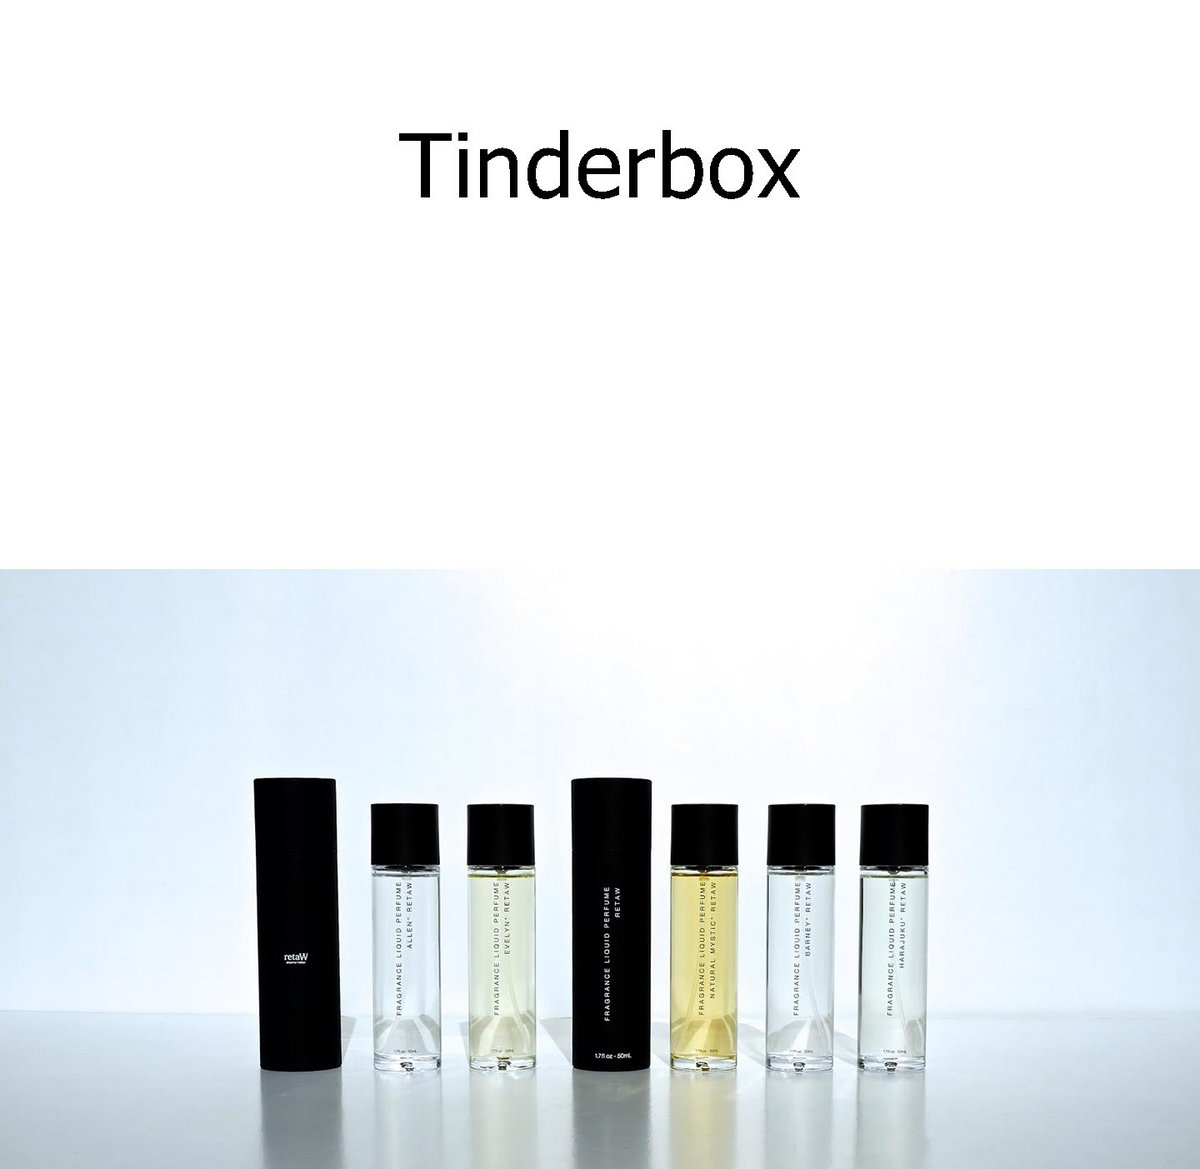 Tinderbox 7.2.1 download windows 7